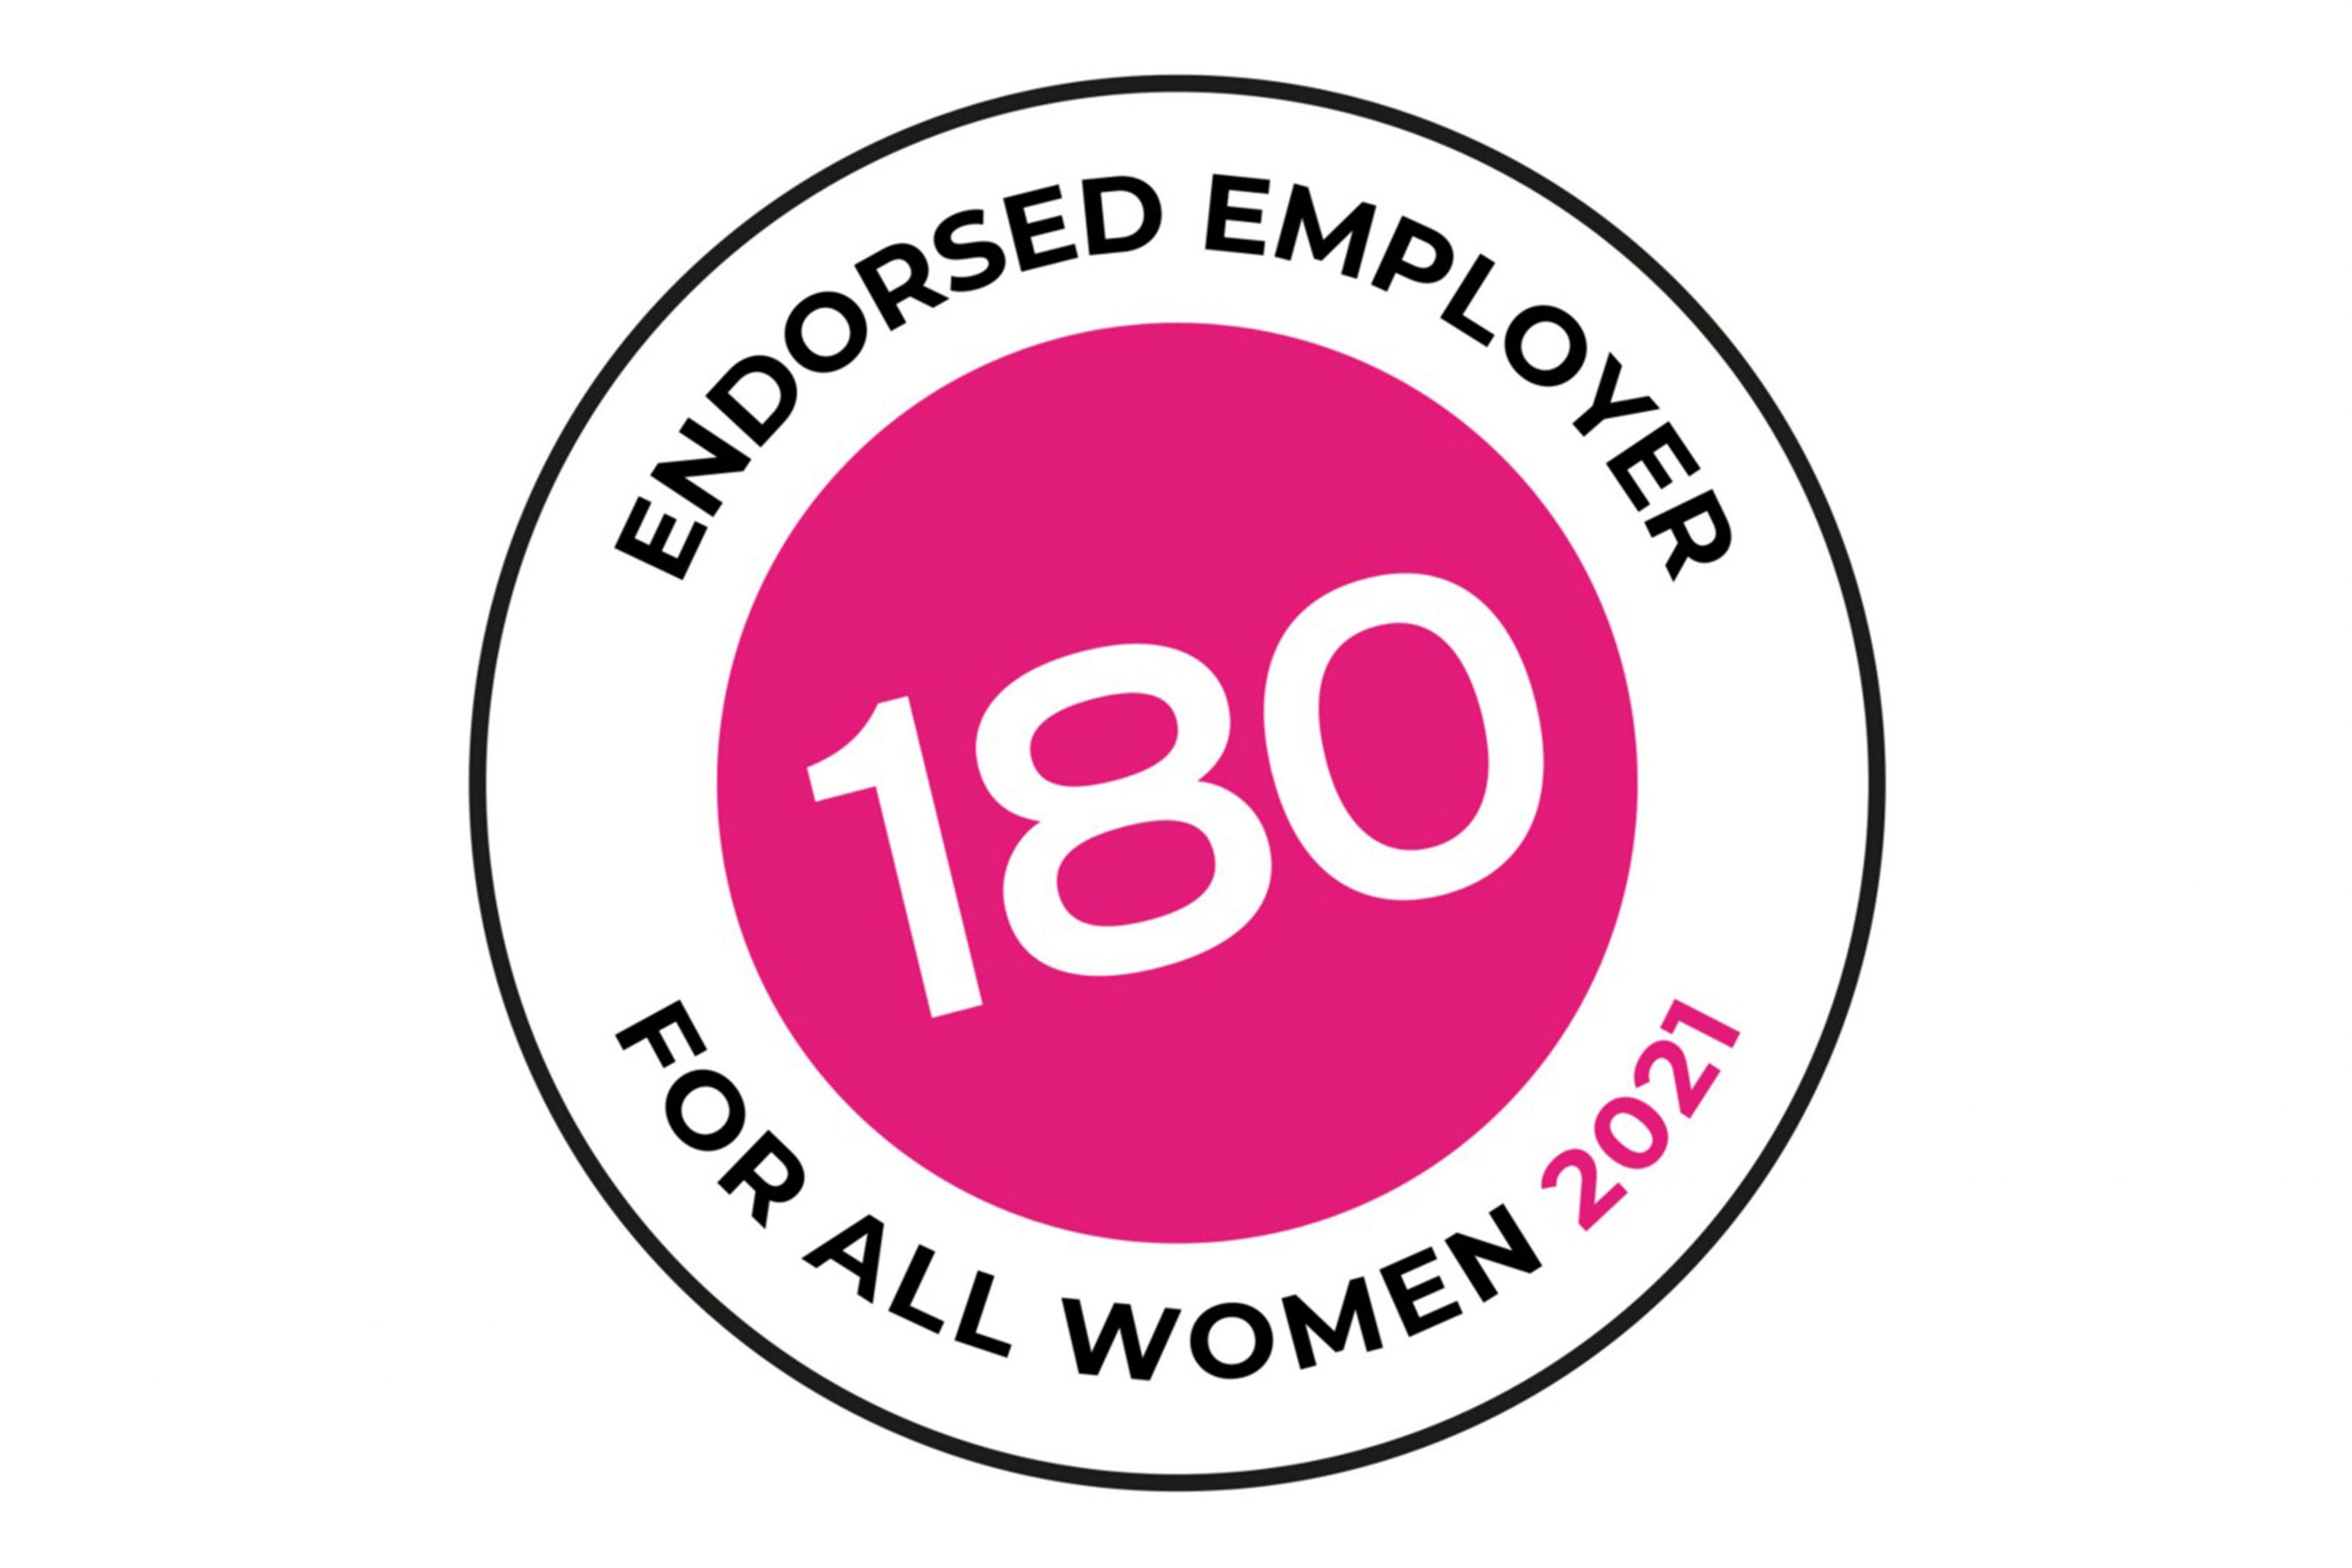 Endorsed employer for all women 2021